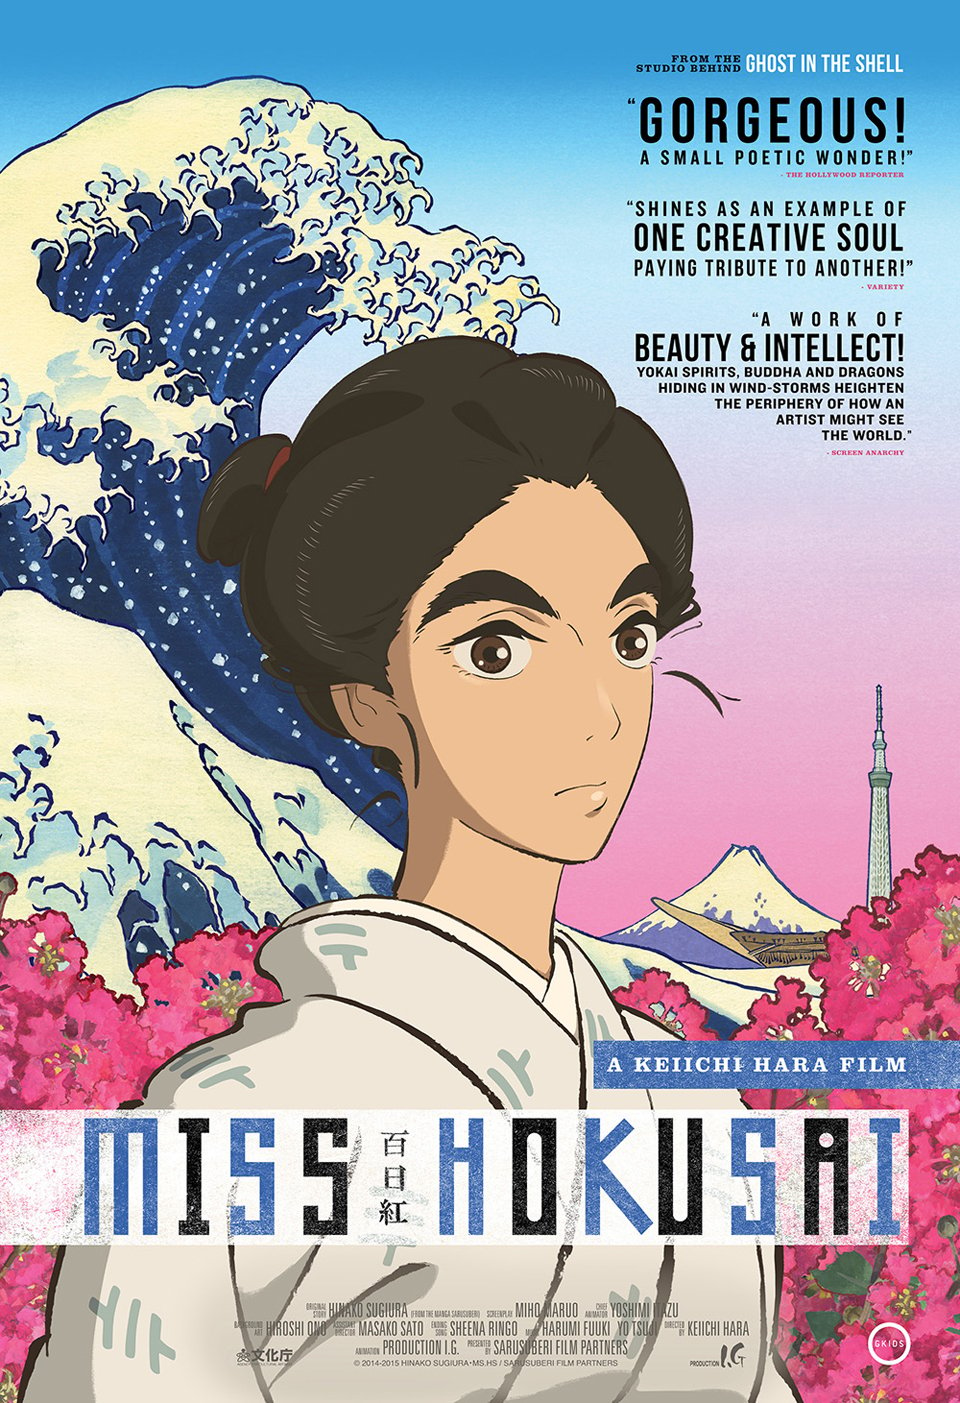 Miss Hokusai (Trailer)